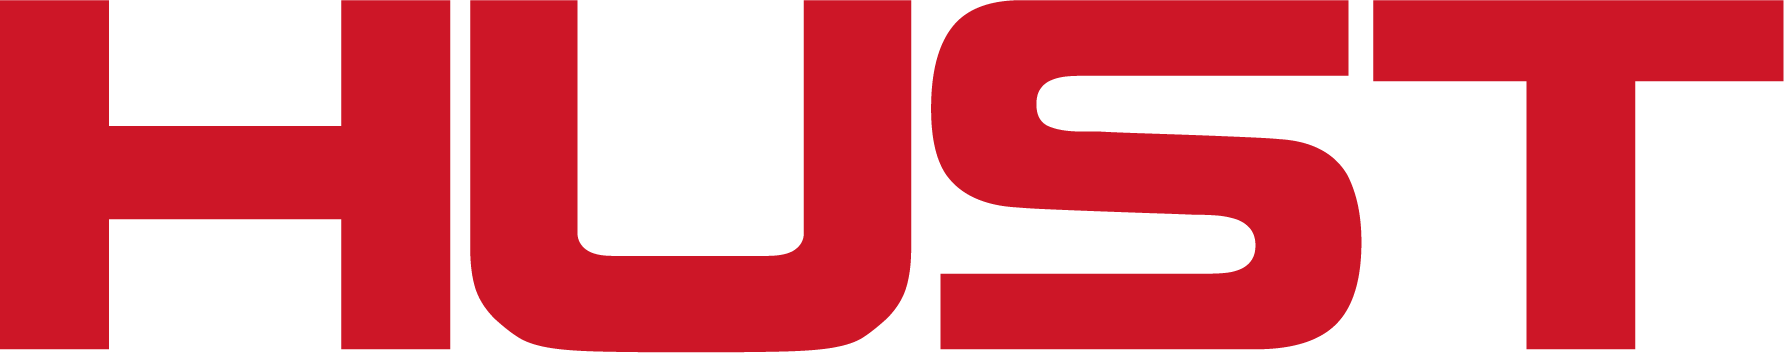 HUST logo